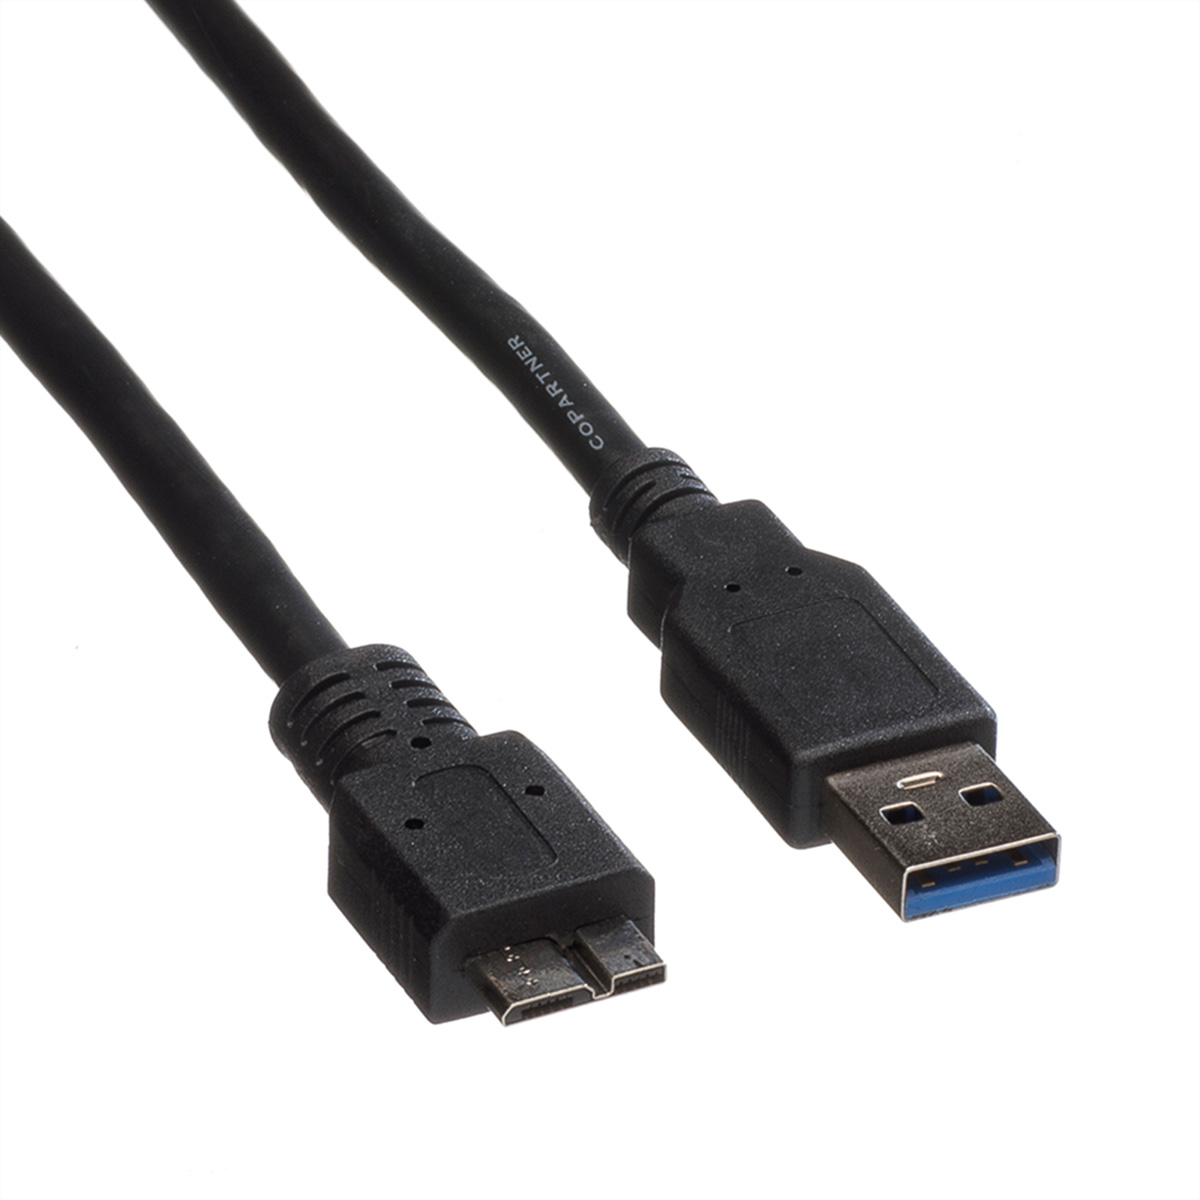 3.2 USB USB Kabel ST A 1 ST Gen B - 3.2 Micro ROLINE Micro Kabel,